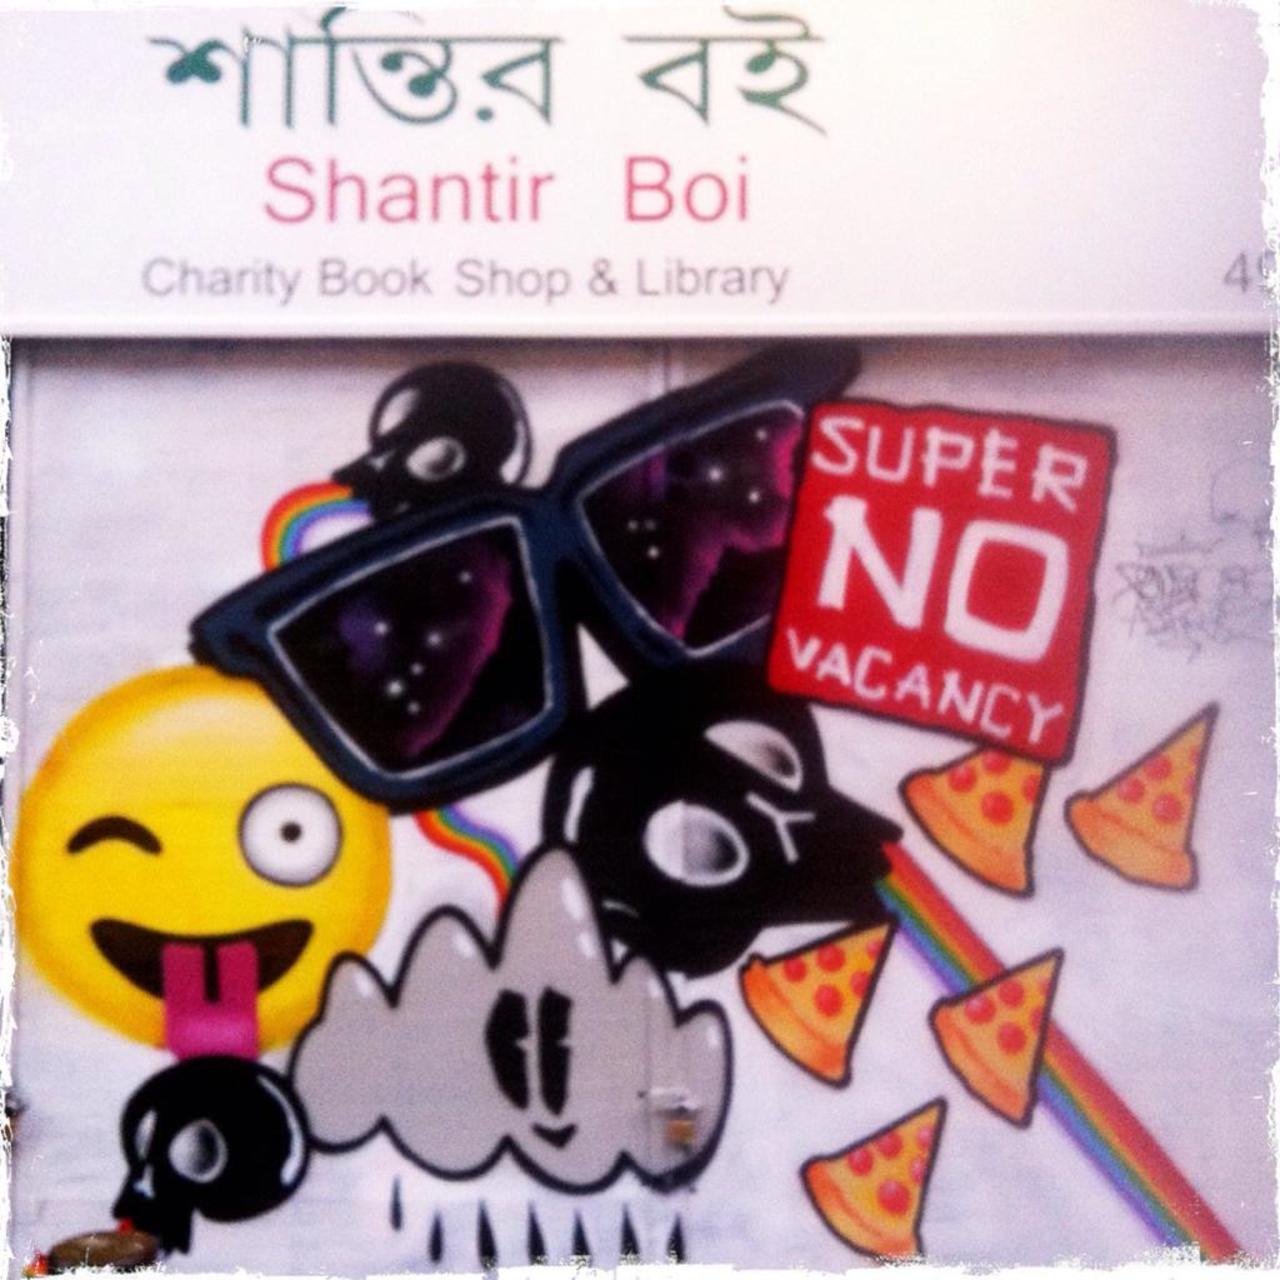 Shutter art at the Shantir Boi charity shop on Fashion Street

#art #streetart #graffiti http://t.co/CcdKLLuOD1